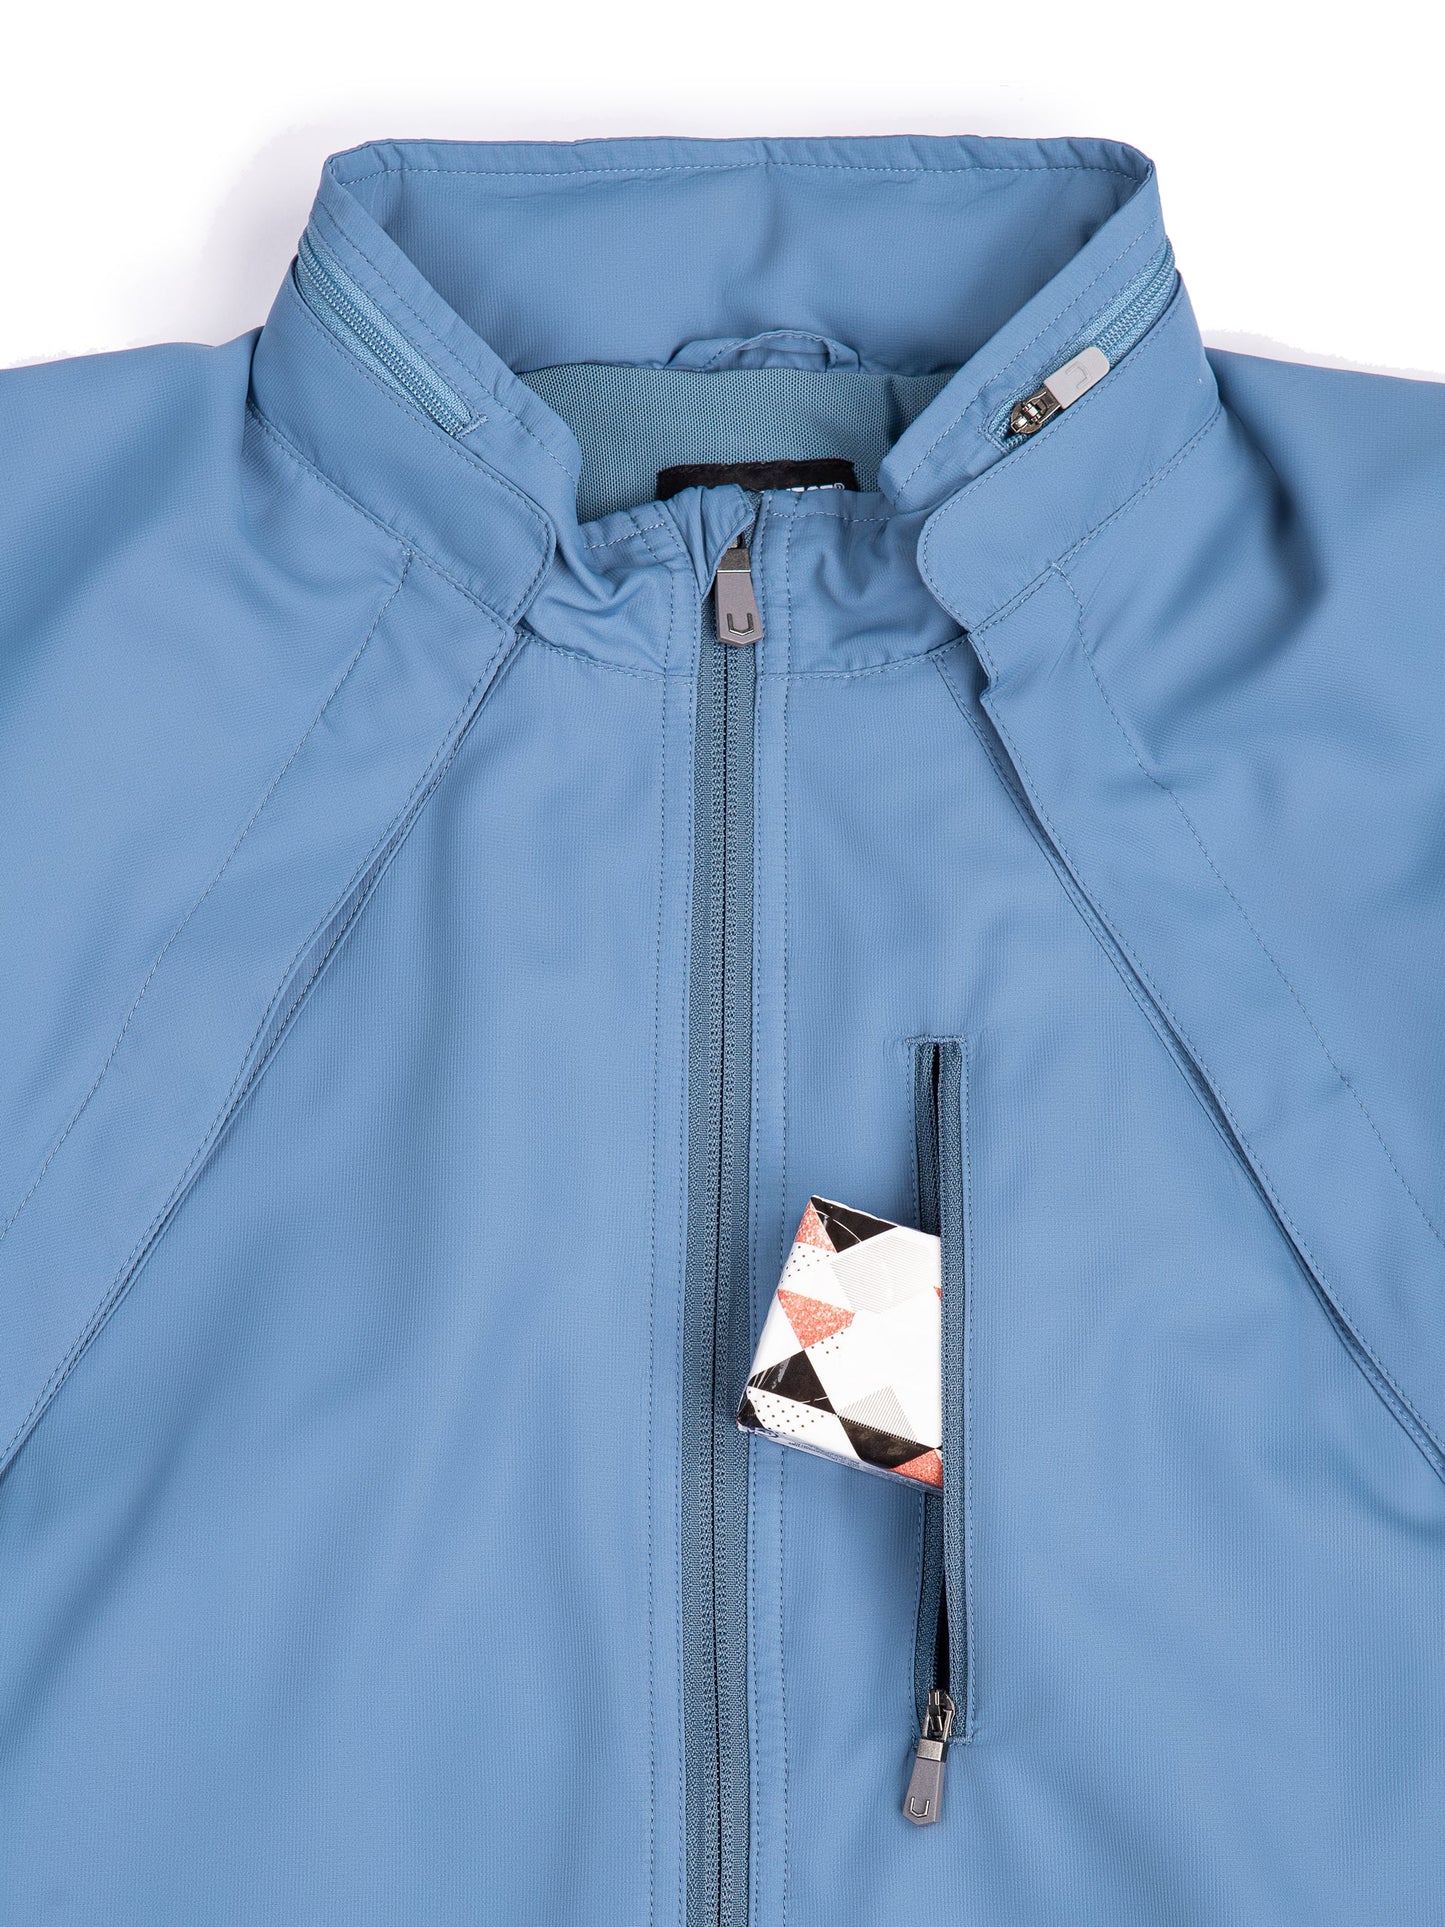 Tropiformer 3D Men's Convertible Jacket & Windbreaker with 22 Pockets ...